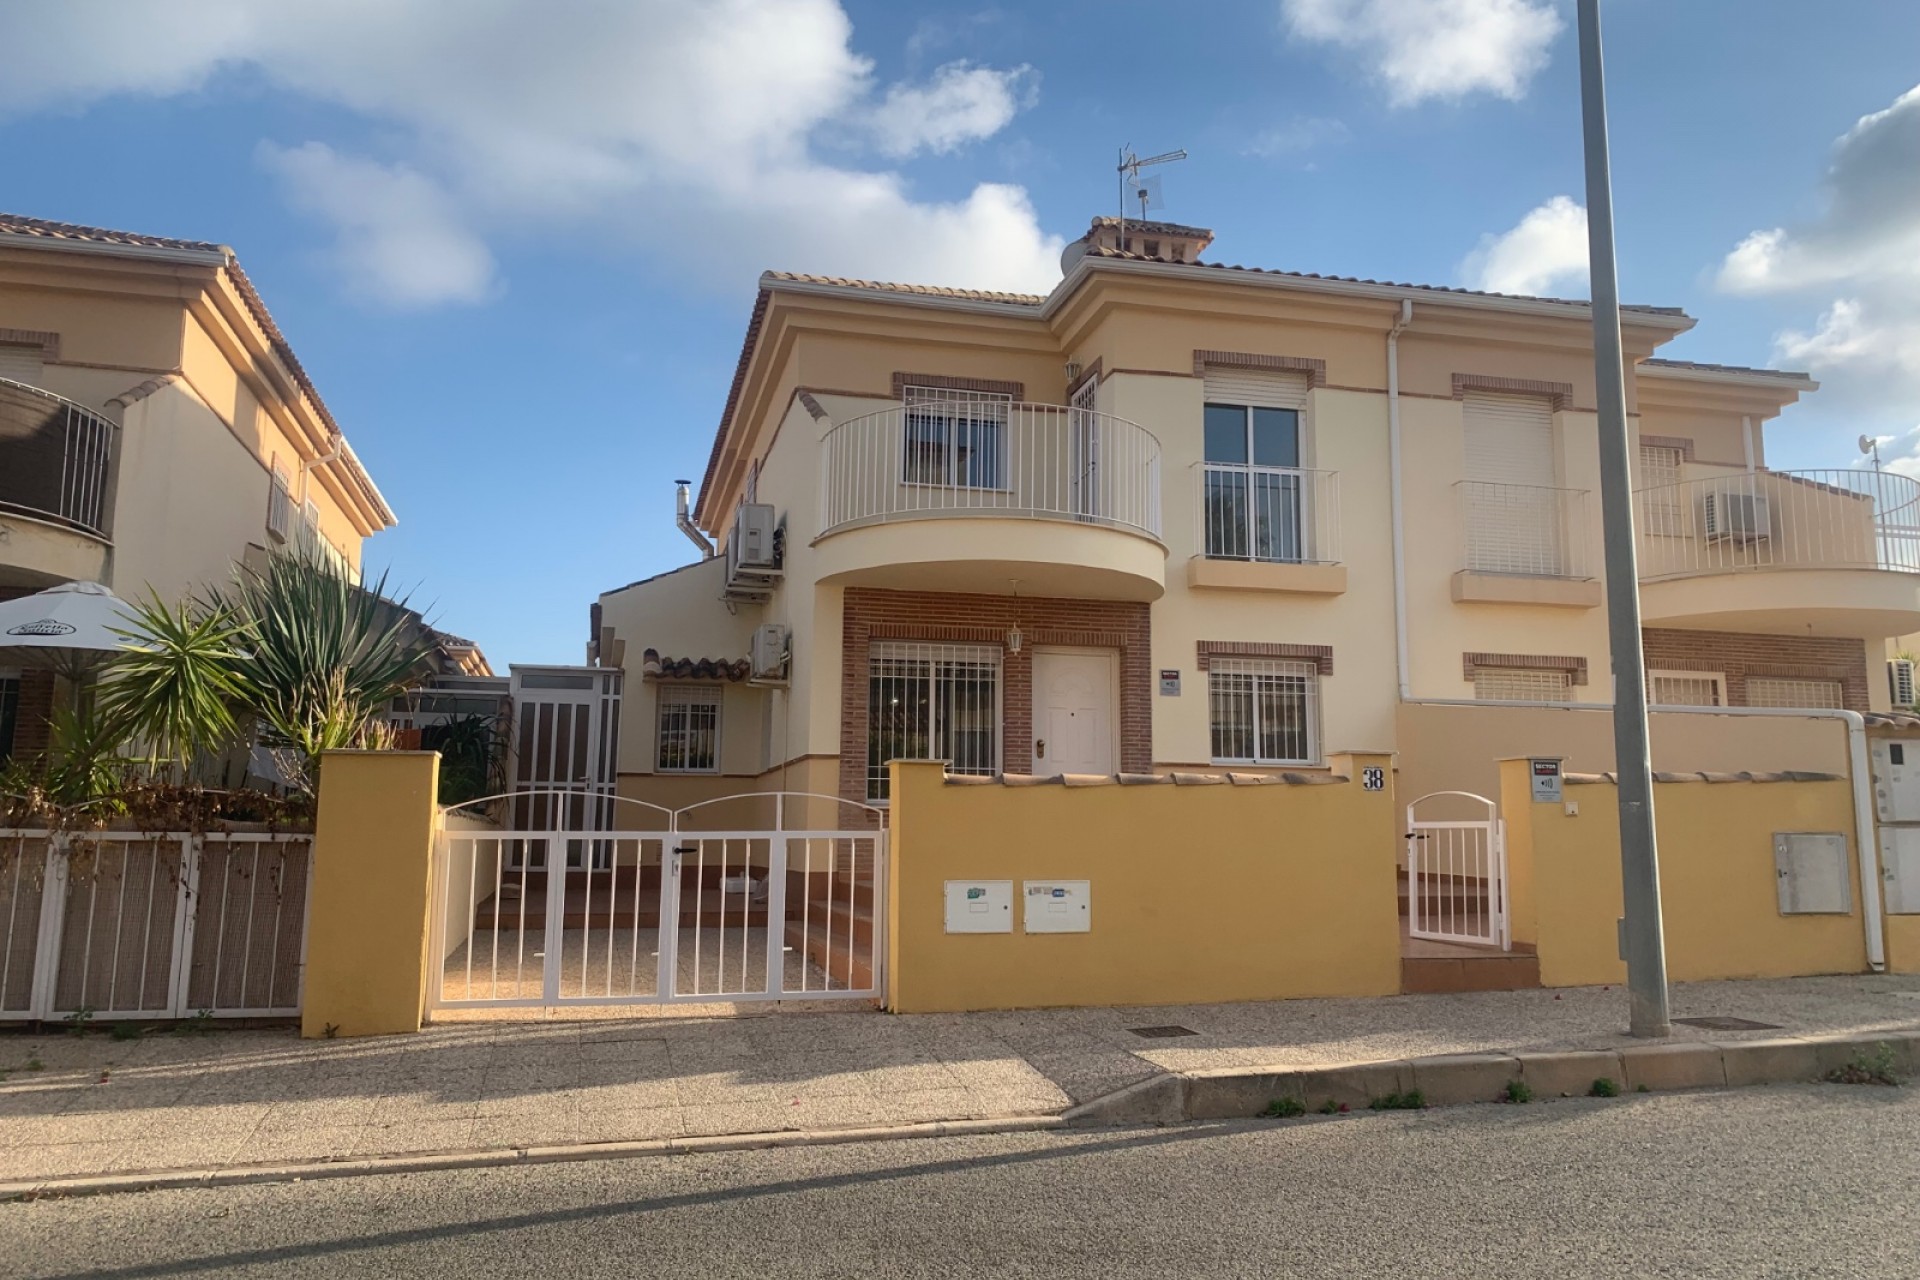 For sale: 3 bedroom house / villa in Villamartin, Costa Blanca